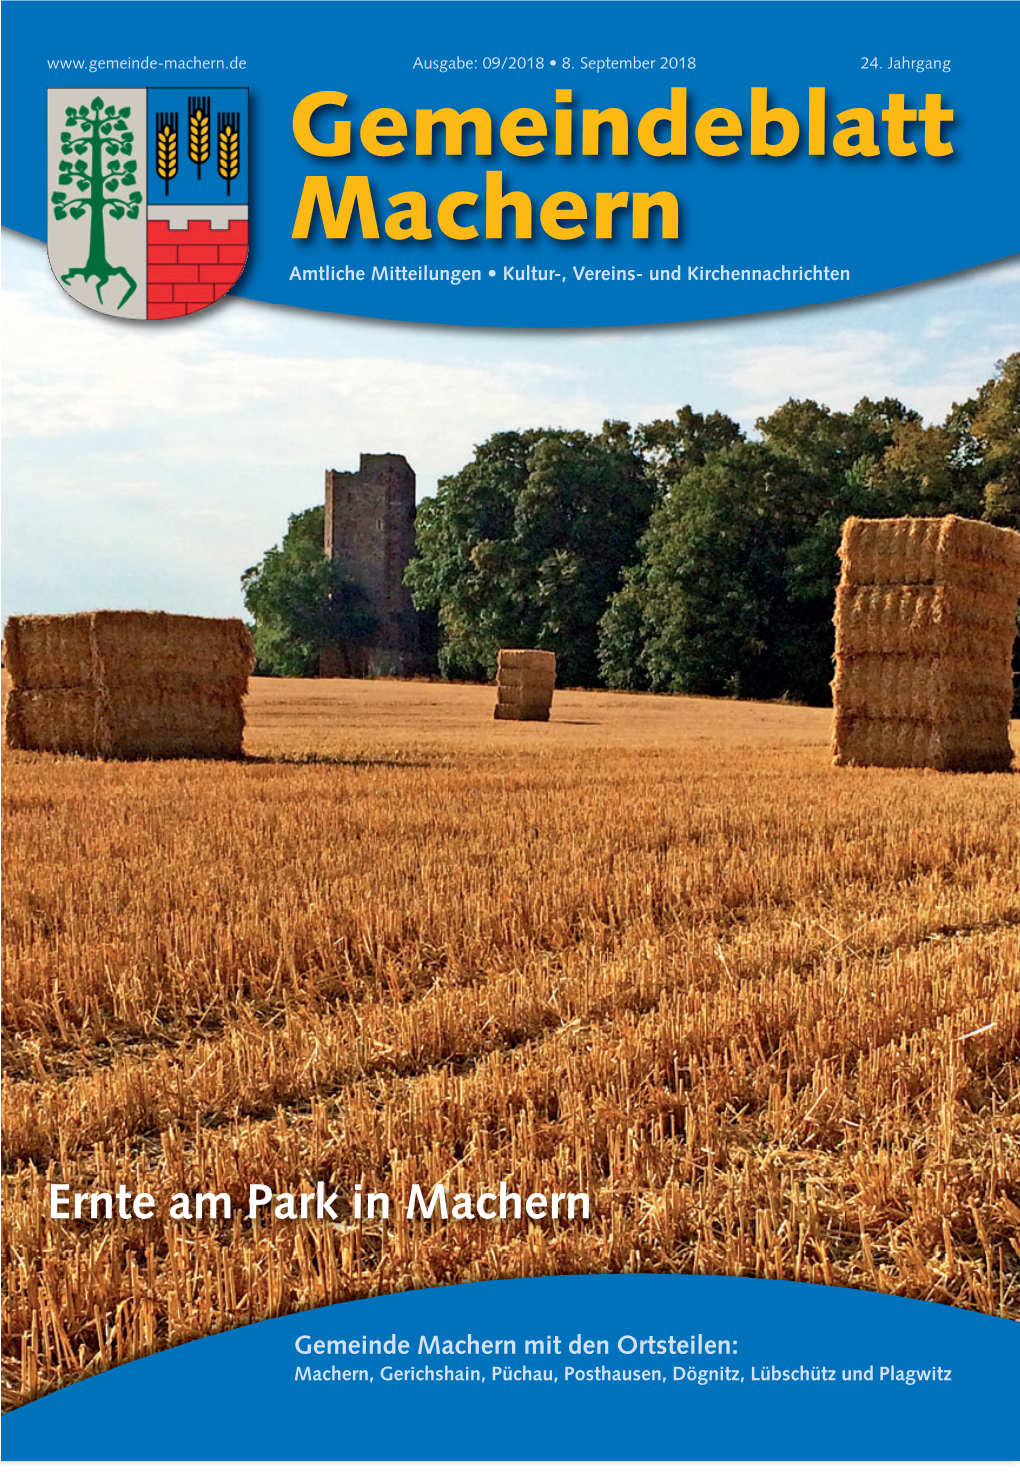 Gemeindeblatt Machern (Amtsblatt)